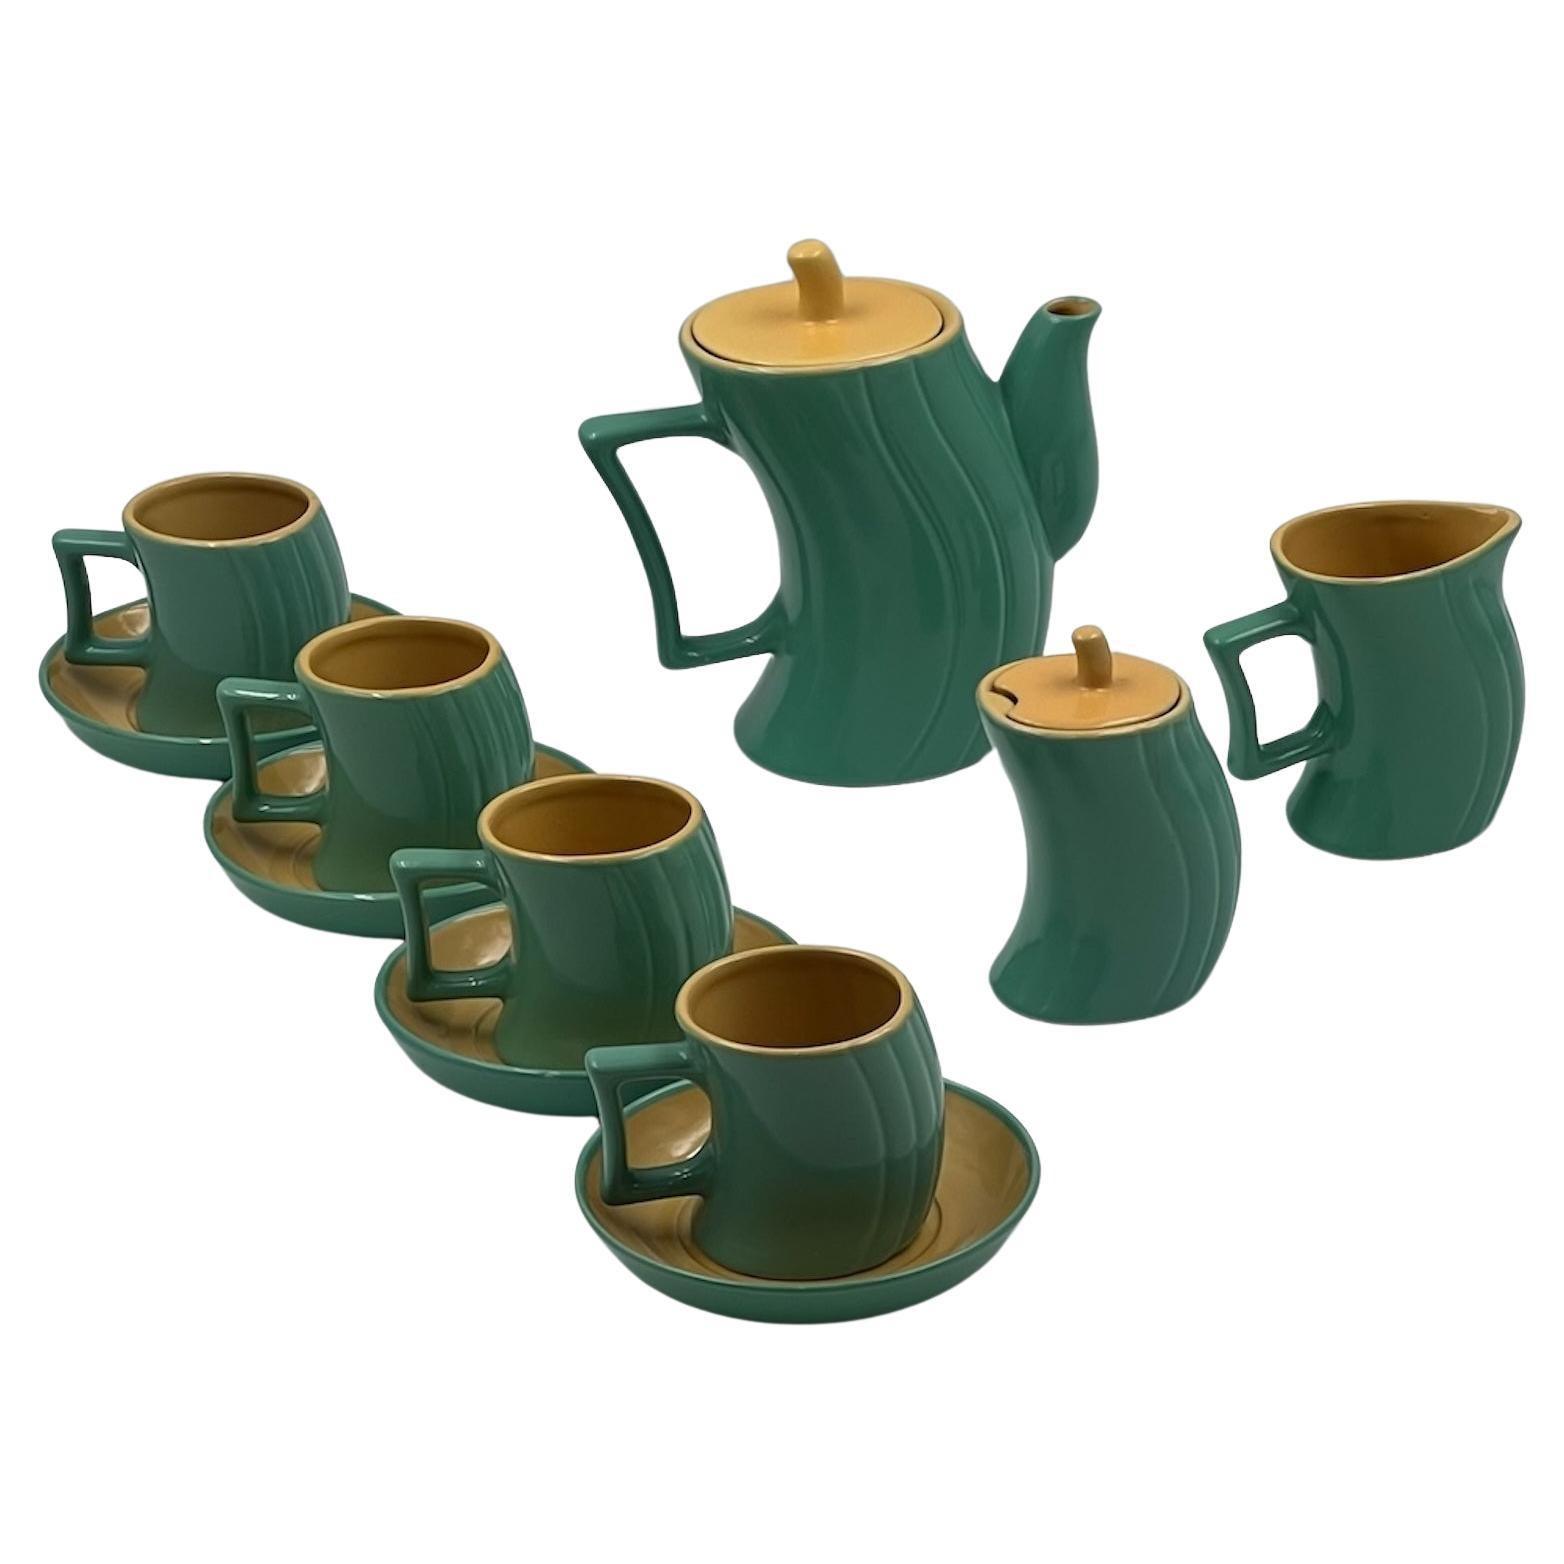 Vintage Memphis Naj Oleari Ceramic Tea Set by Massimo Iosa Ghini - 1980s